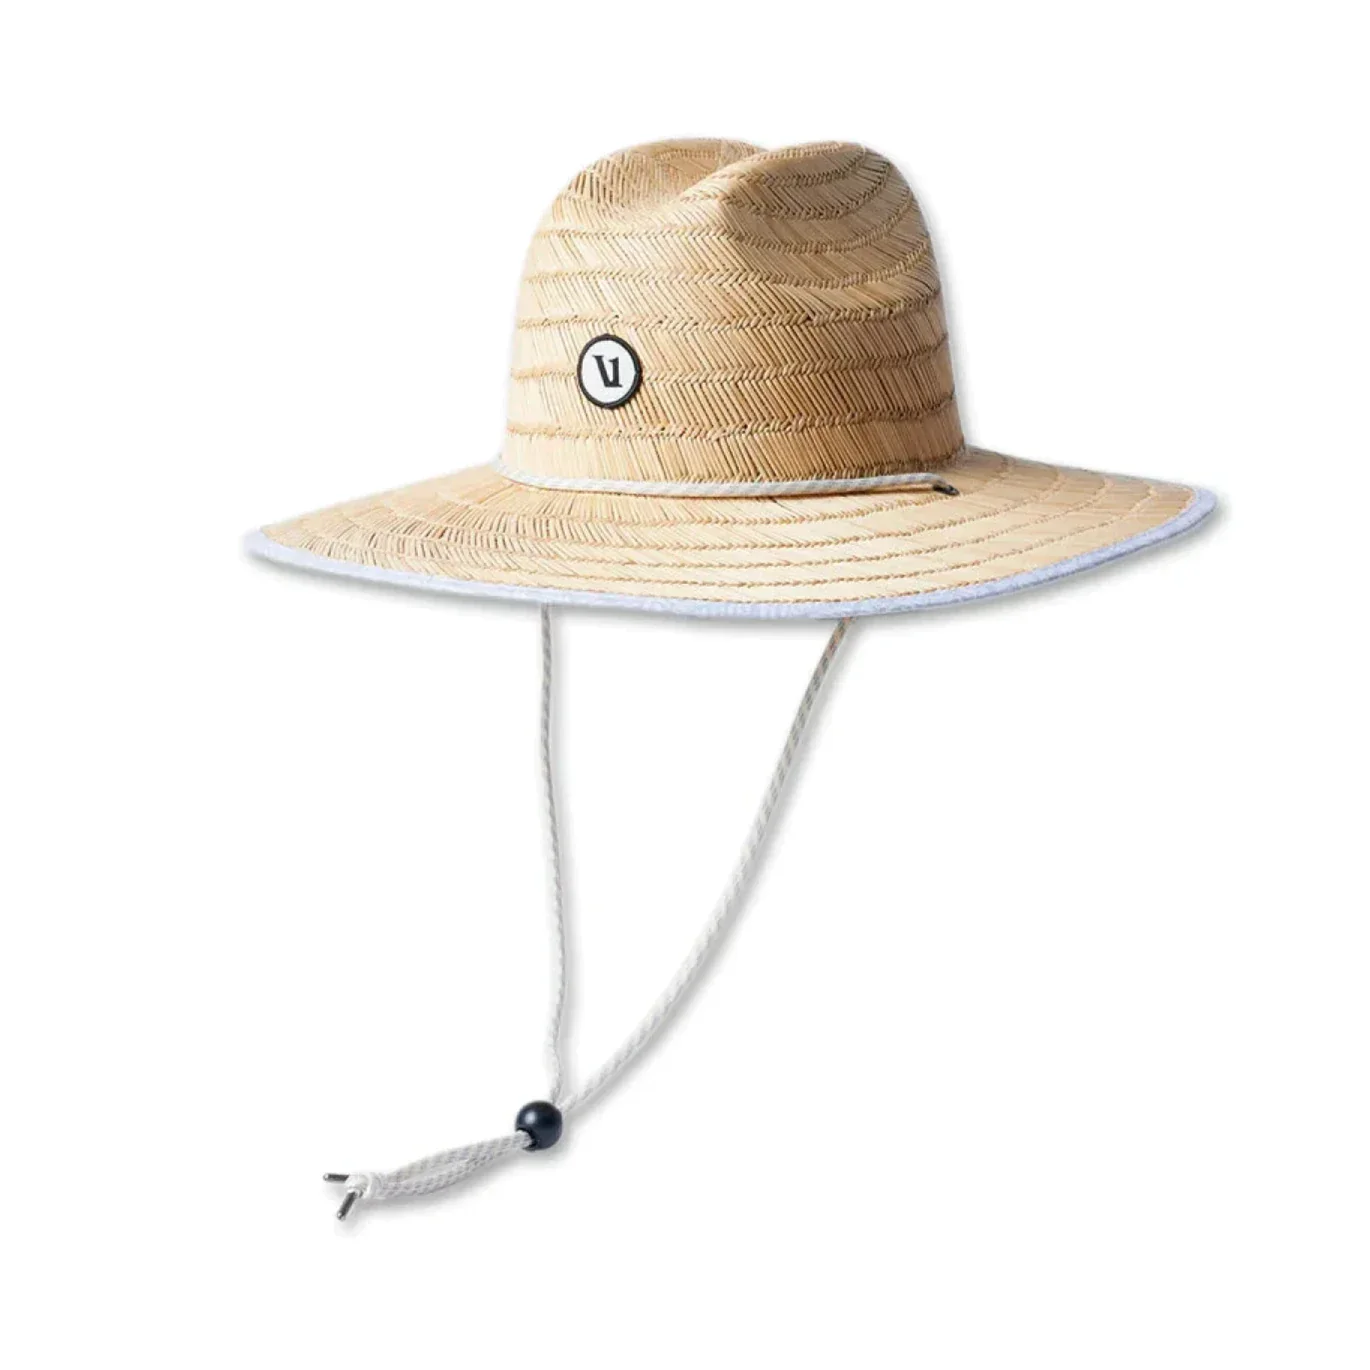 Vuori HATS - HATS BILLED - HATS BILLED Beacons Lifeguard Hat UBS UMBER SAGO OS